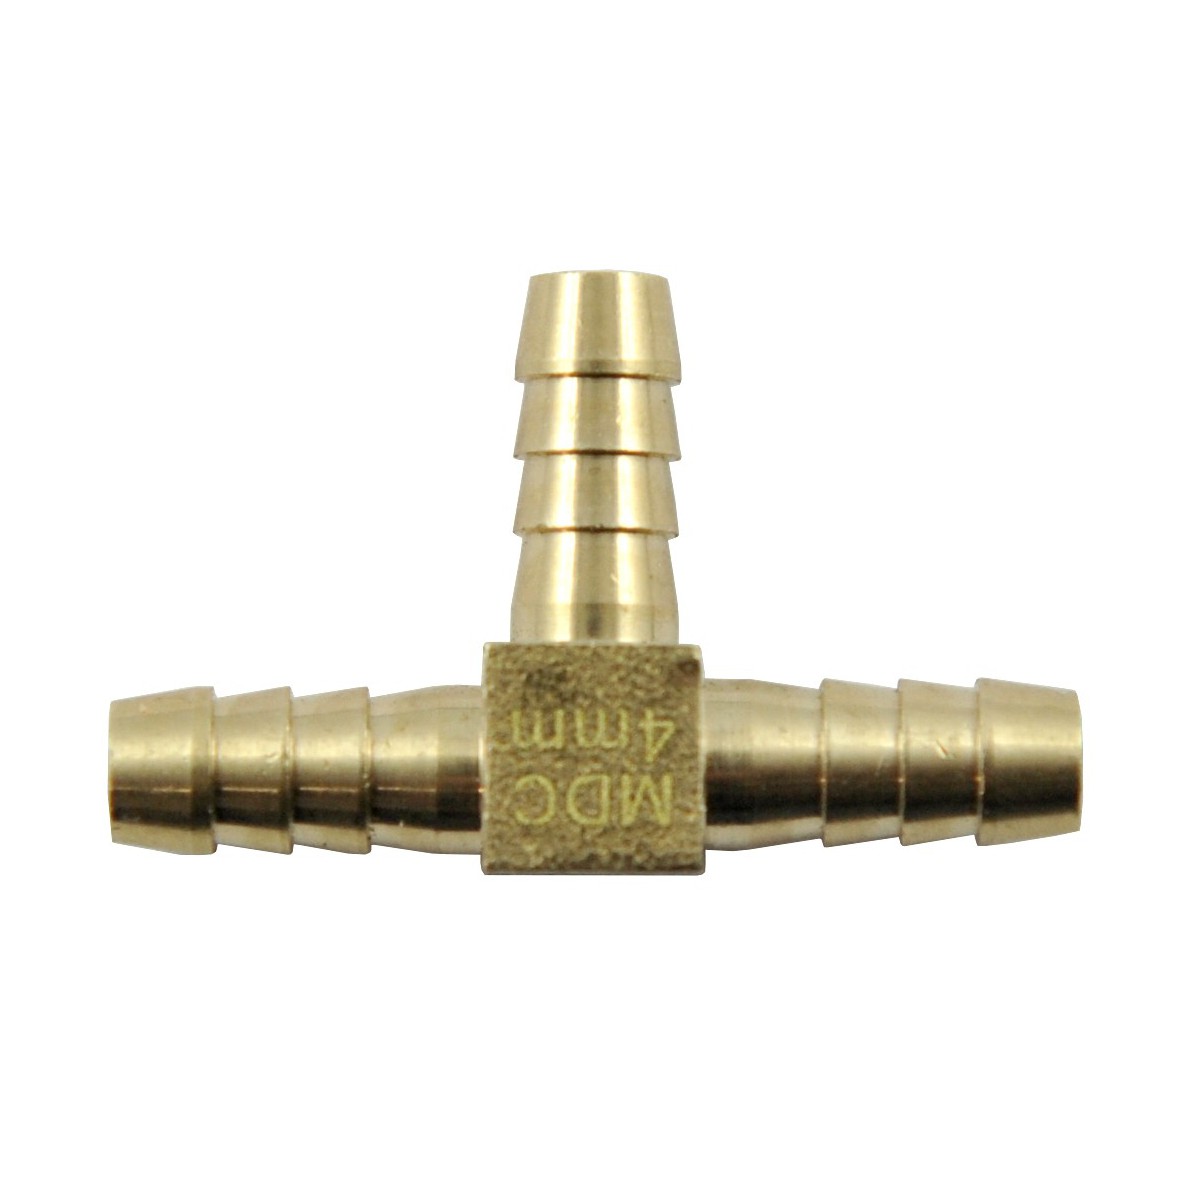 Tee 30x18x4 mm, connector, nipple, fuel line splitter BRASS